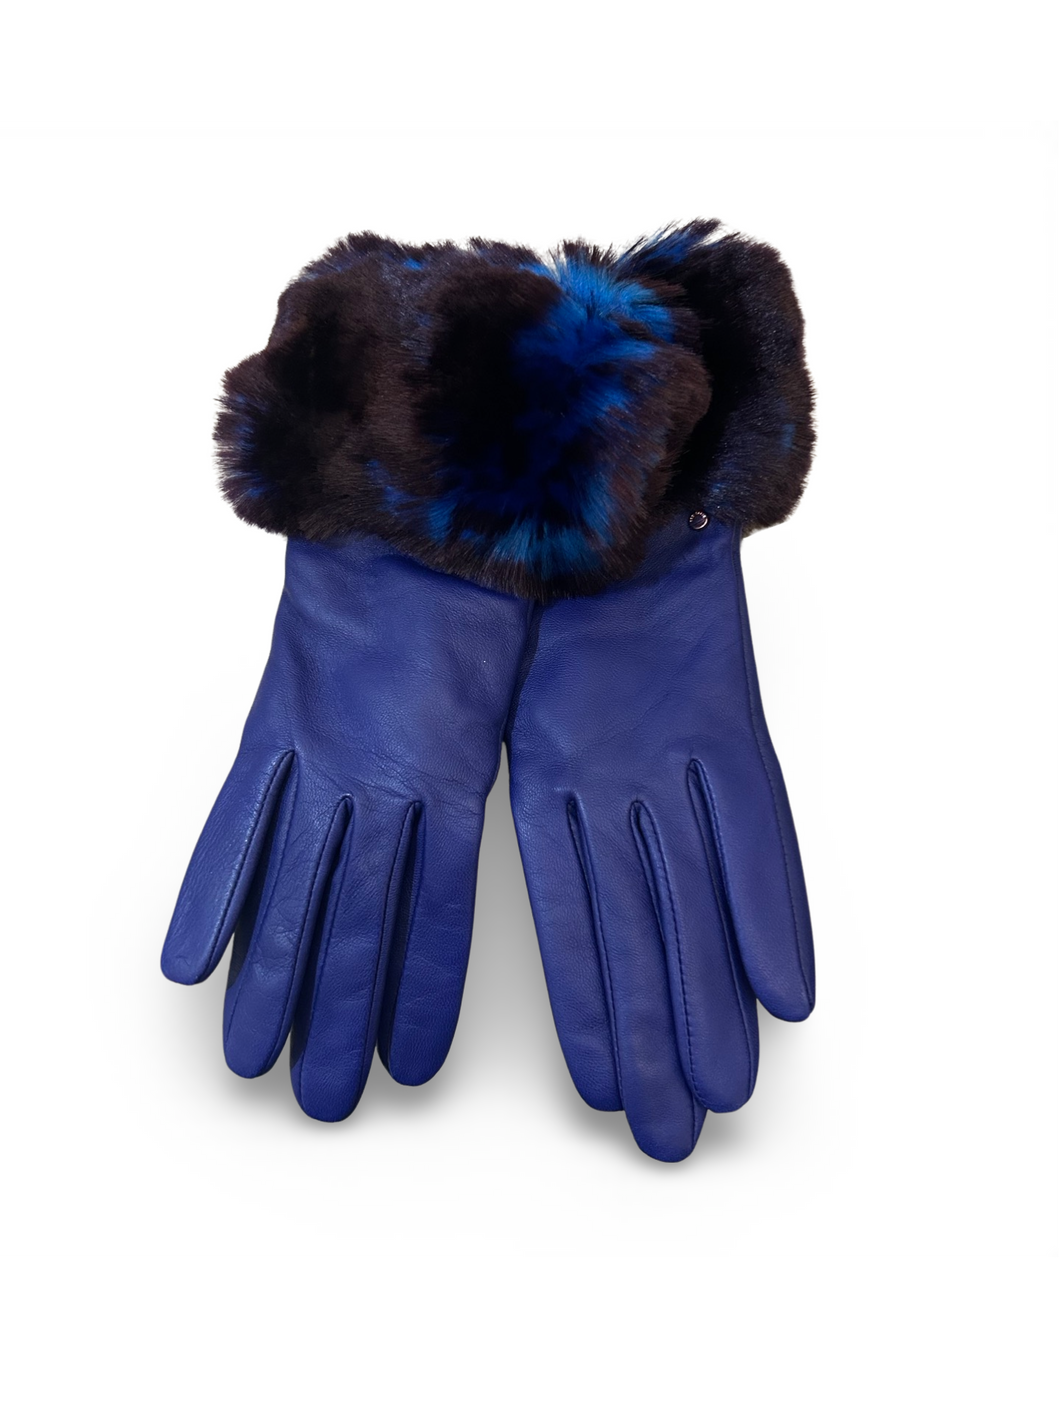 Ted Baker Jullian Blue Leather Faux Fur Gloves S/M